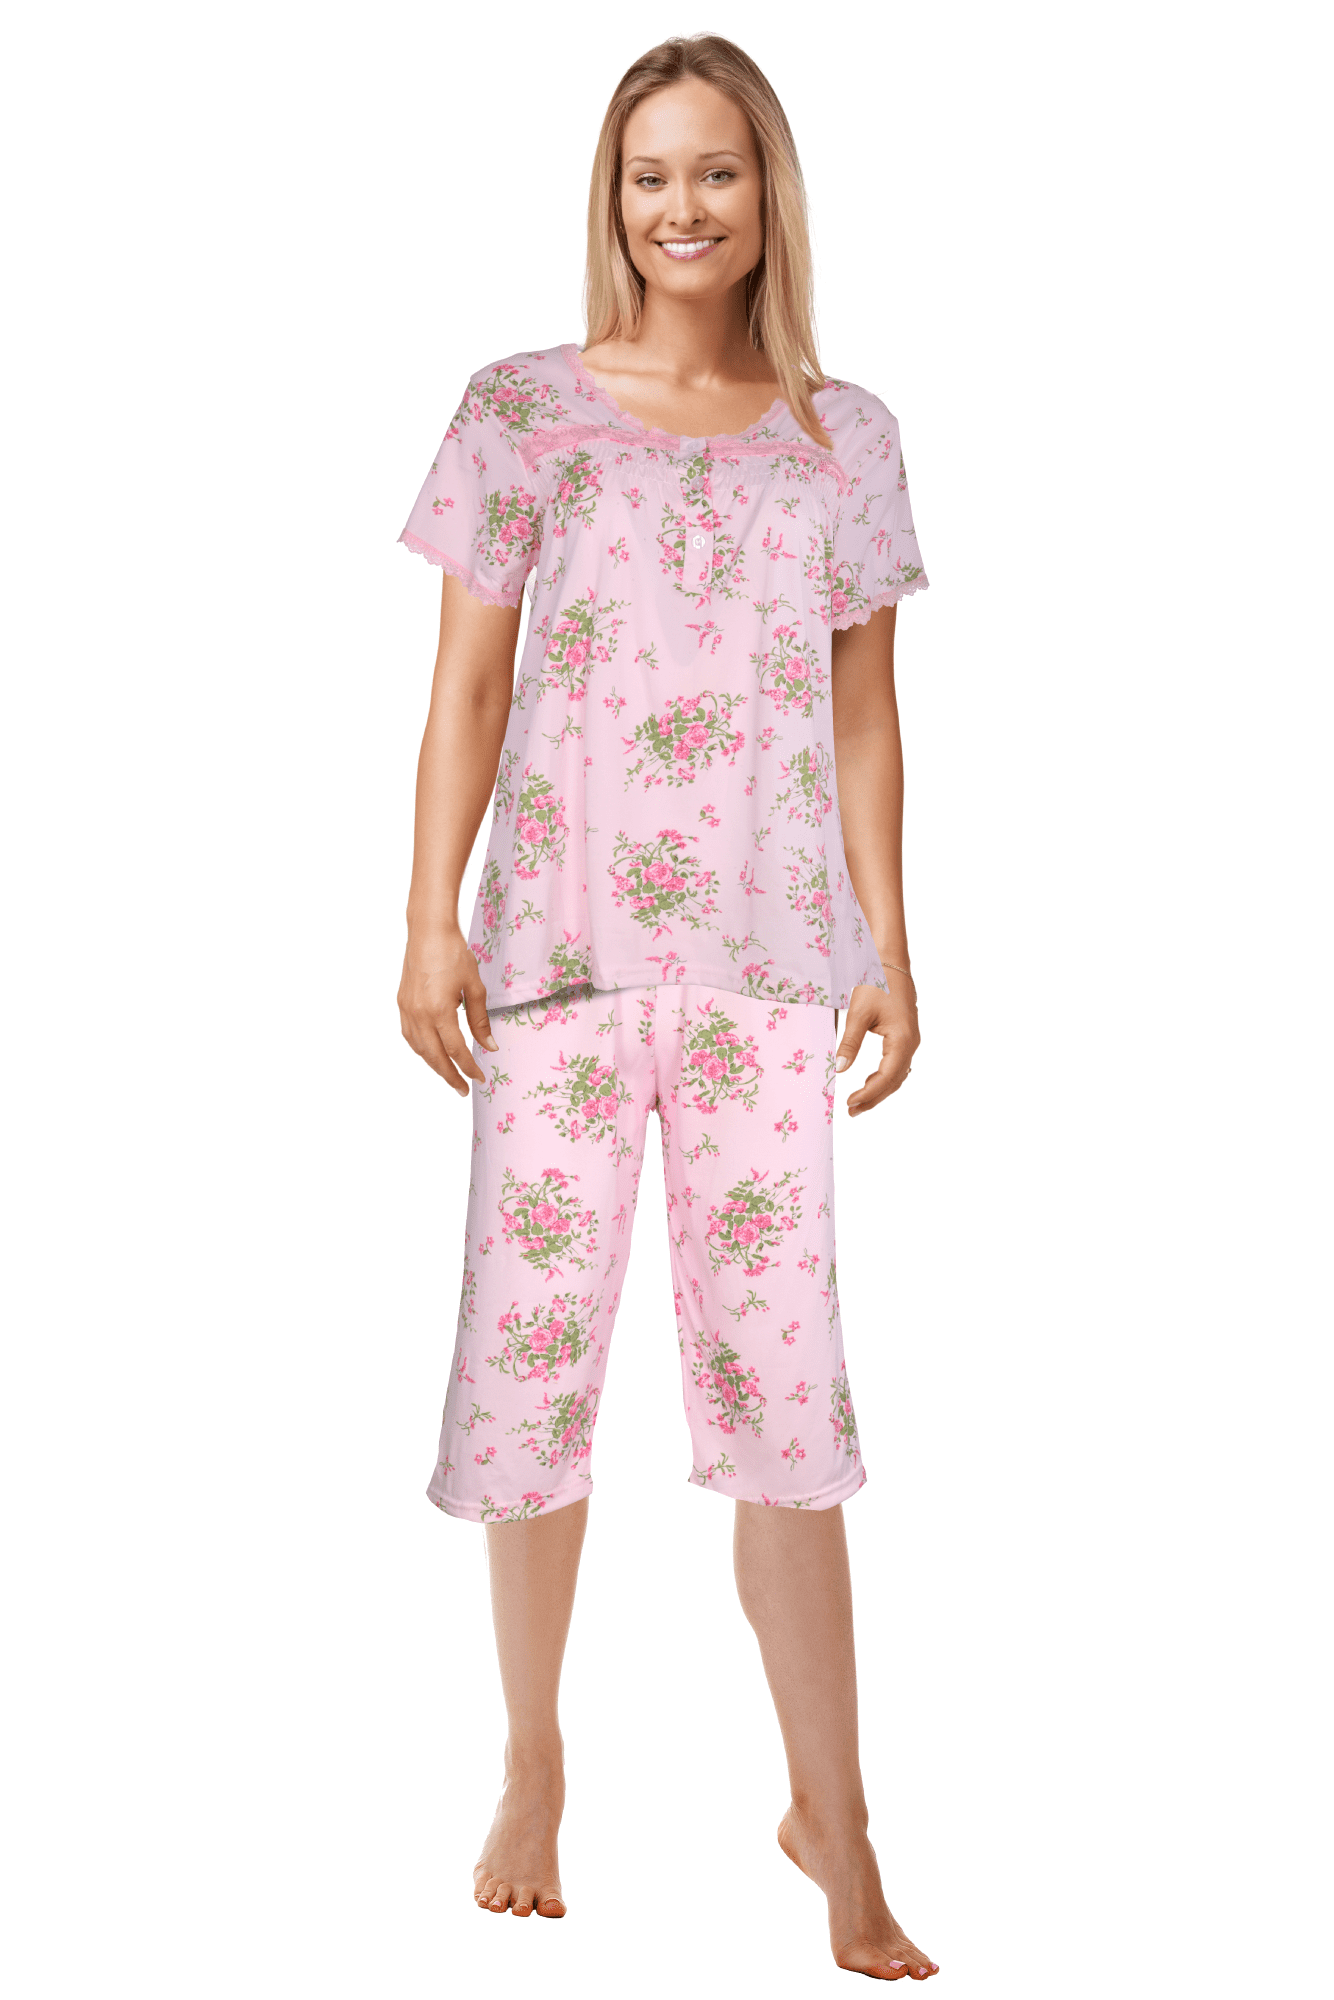 Cossy By Aqua 23515 Women's Short Sleeve Capri Pajama Set - pink